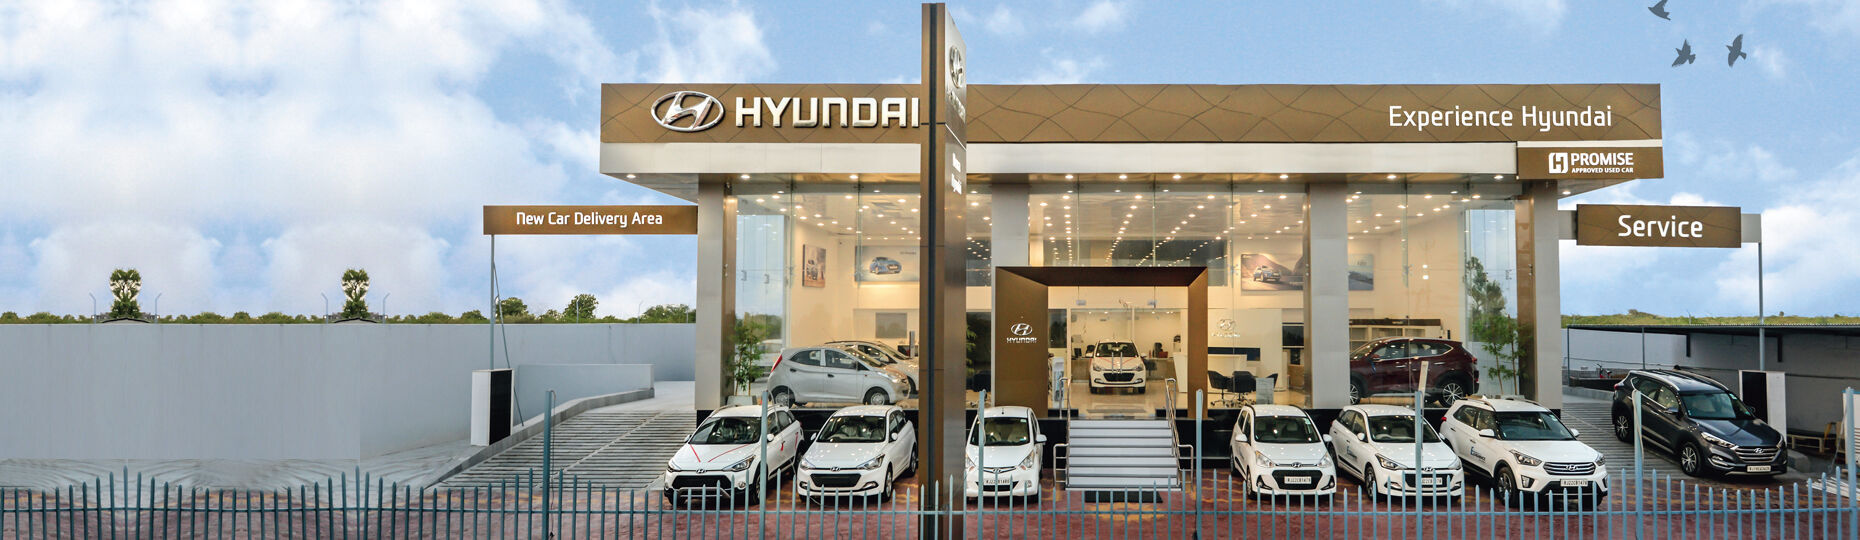 Hyundai new car Delivery area